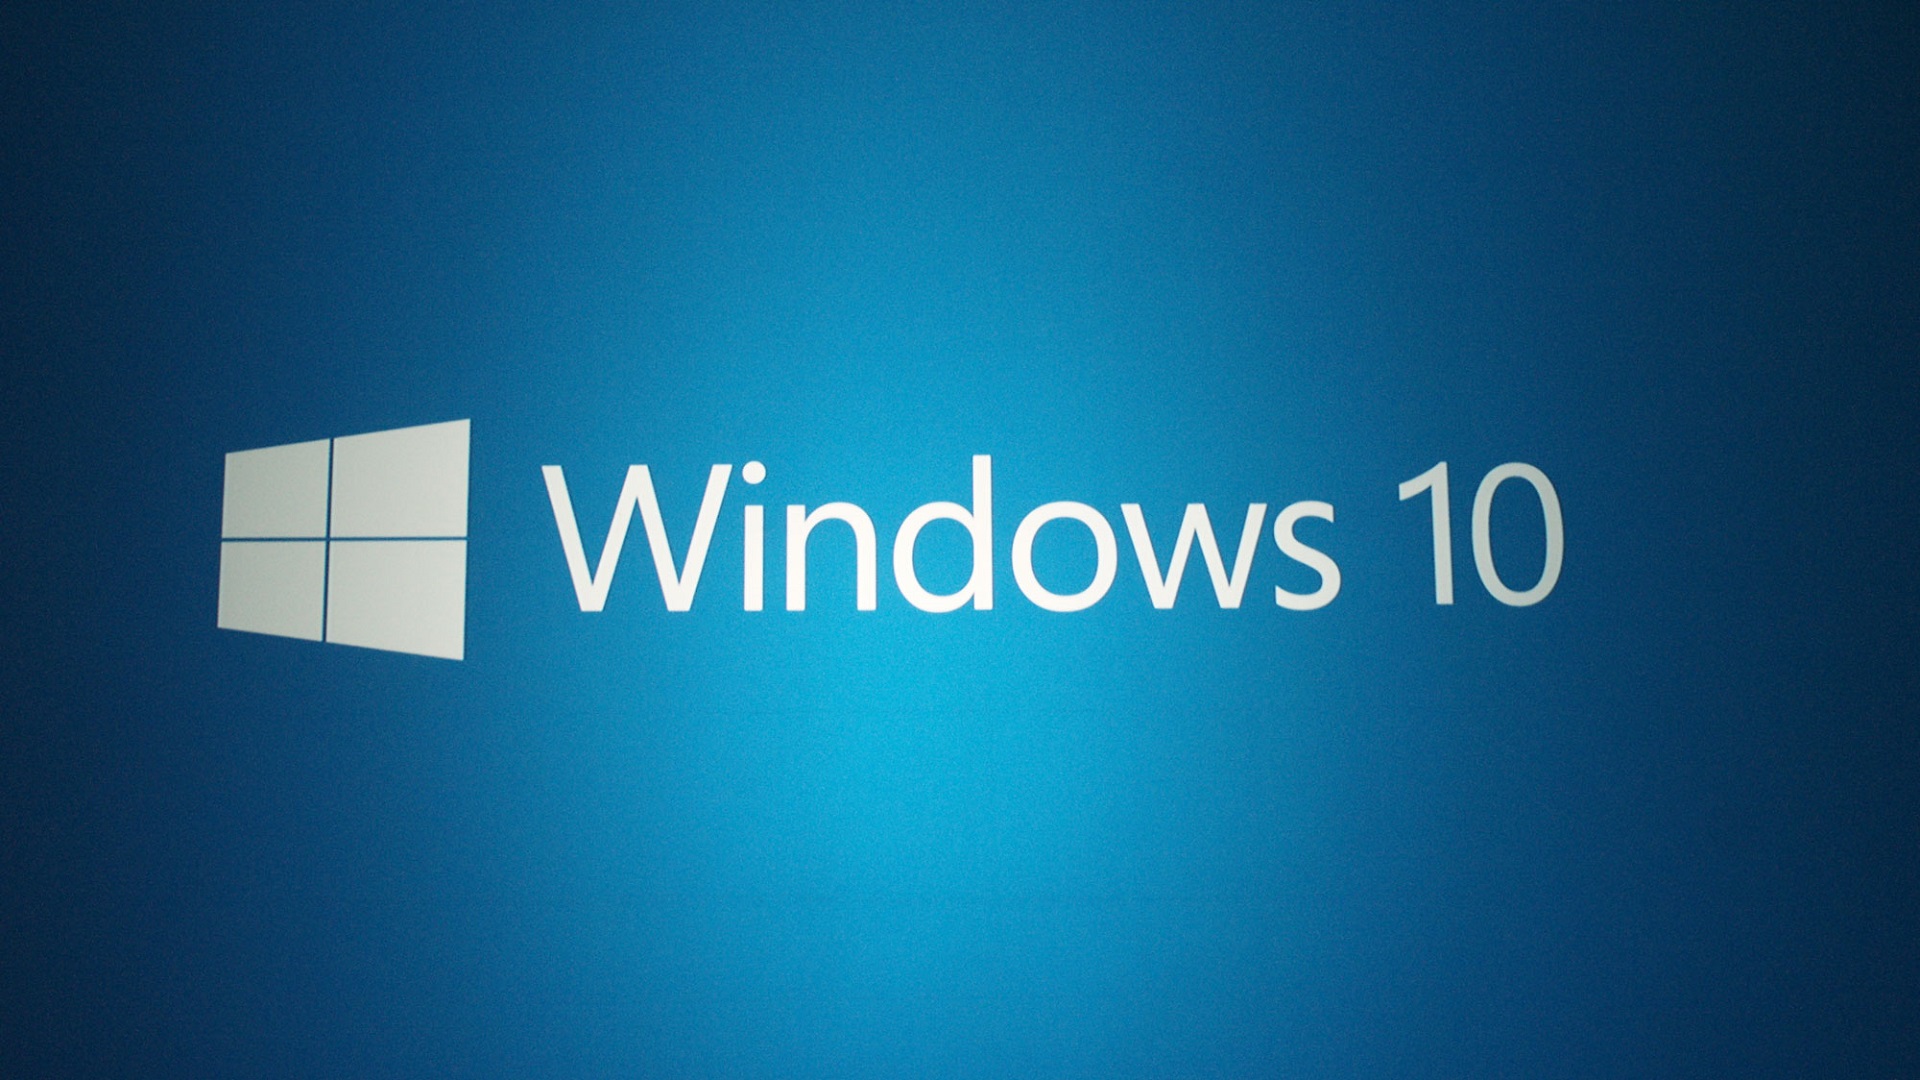 Windows 10 Desktop Wallpaper - Windows 10 Wallpapers